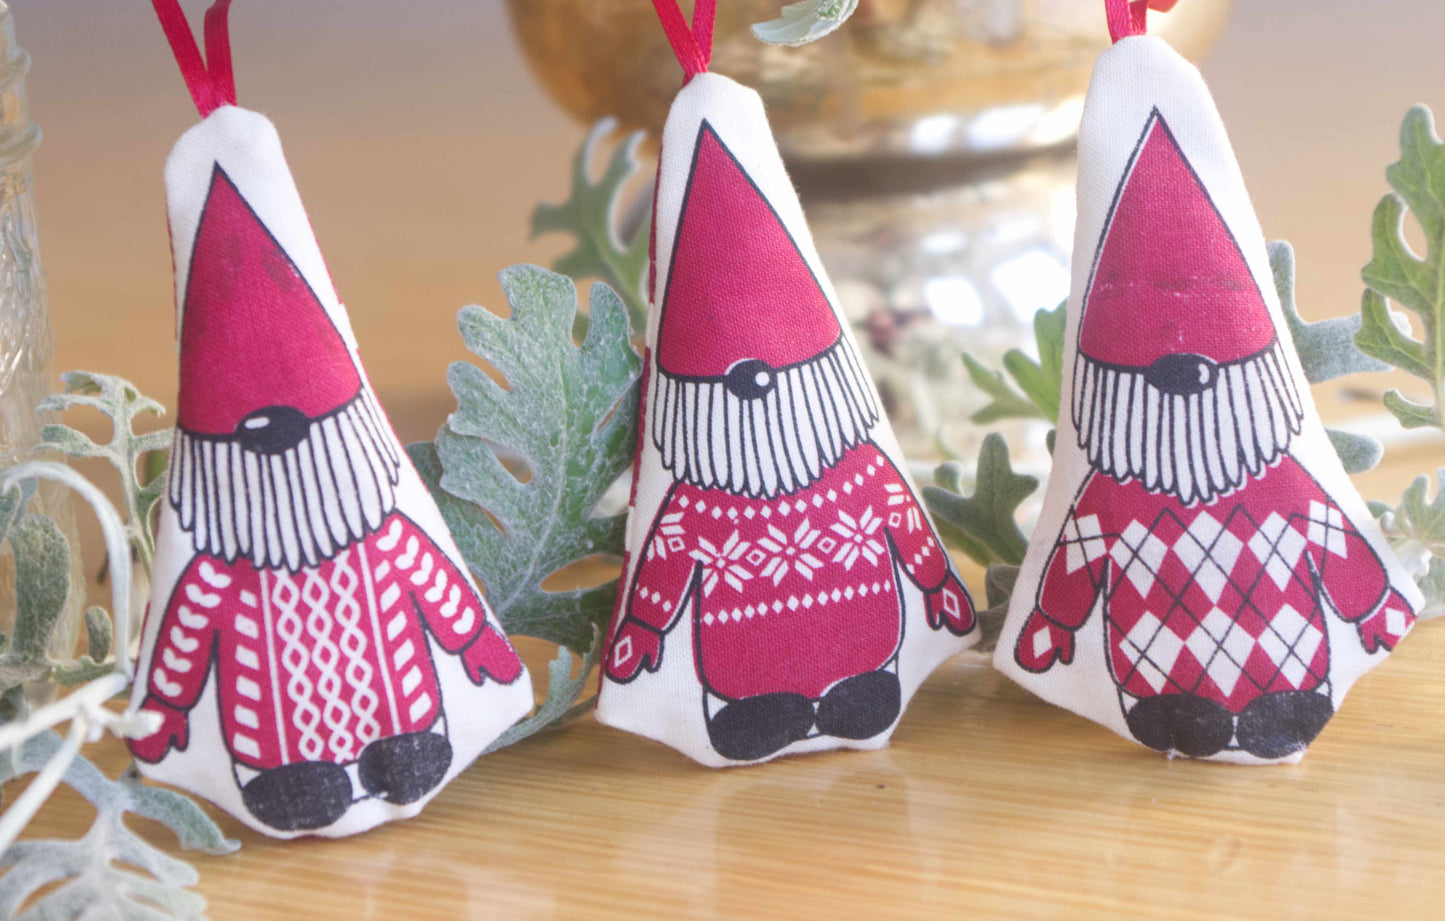 Cut and Sew Gnome Ornaments